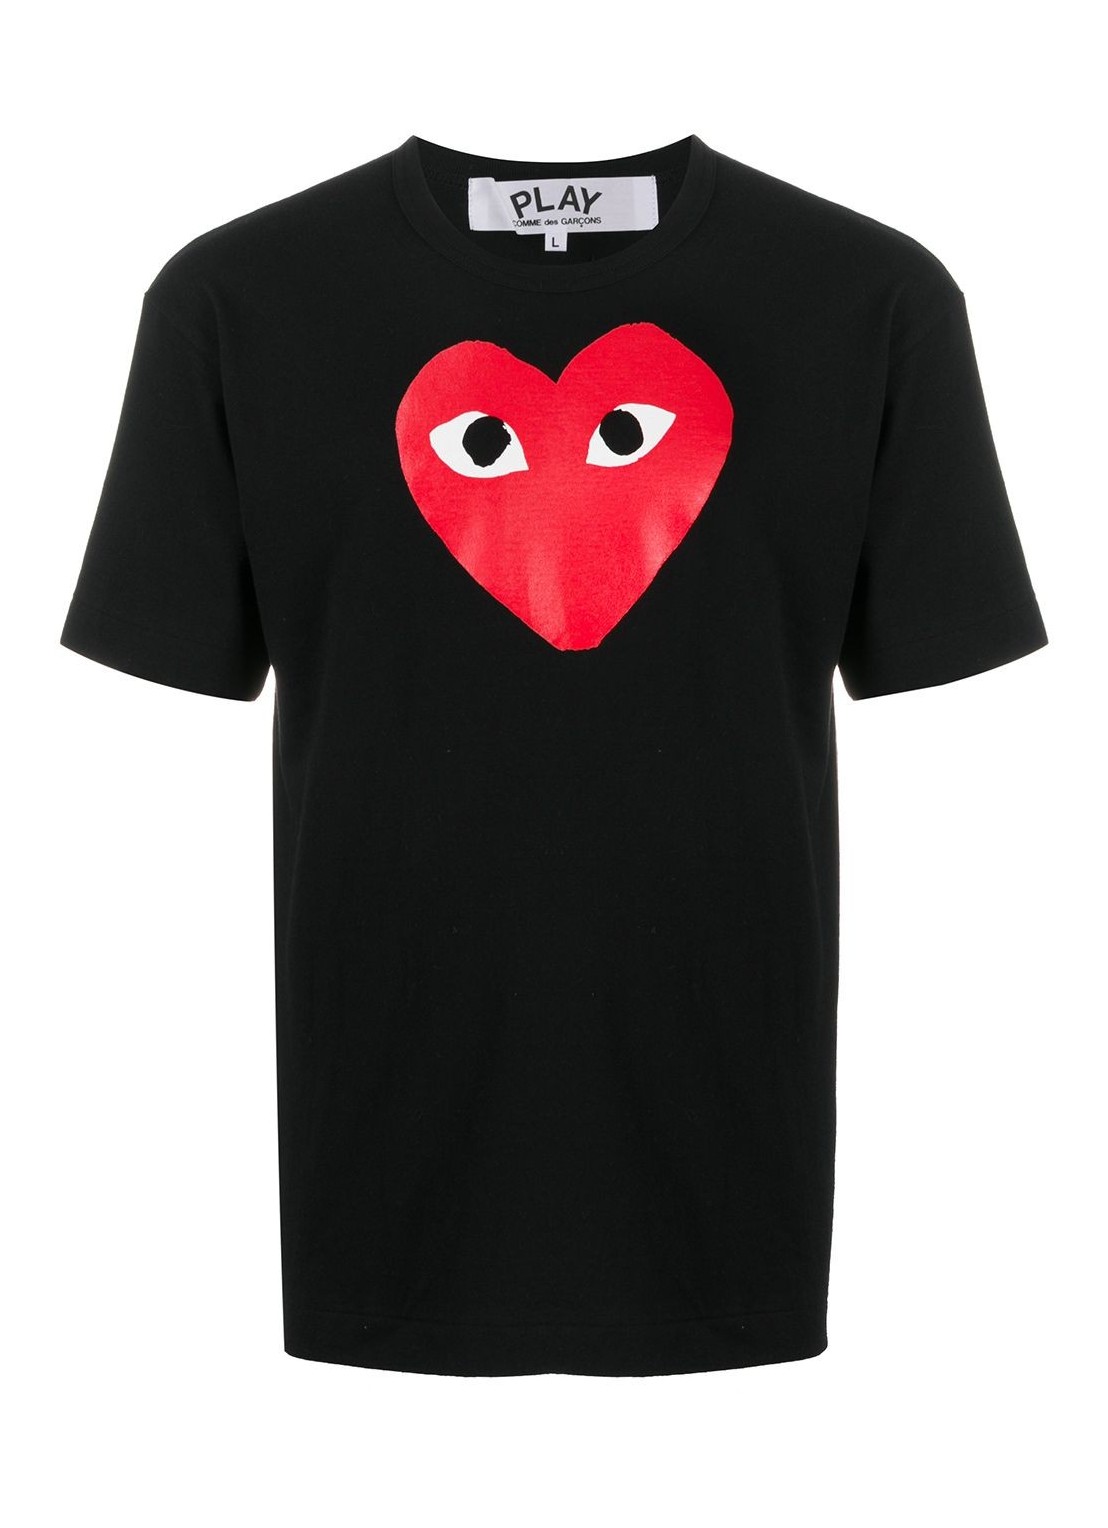 Camiseta comme des garcons t-shirt man play t-shirt men - red heart p1t112 black talla negro
 